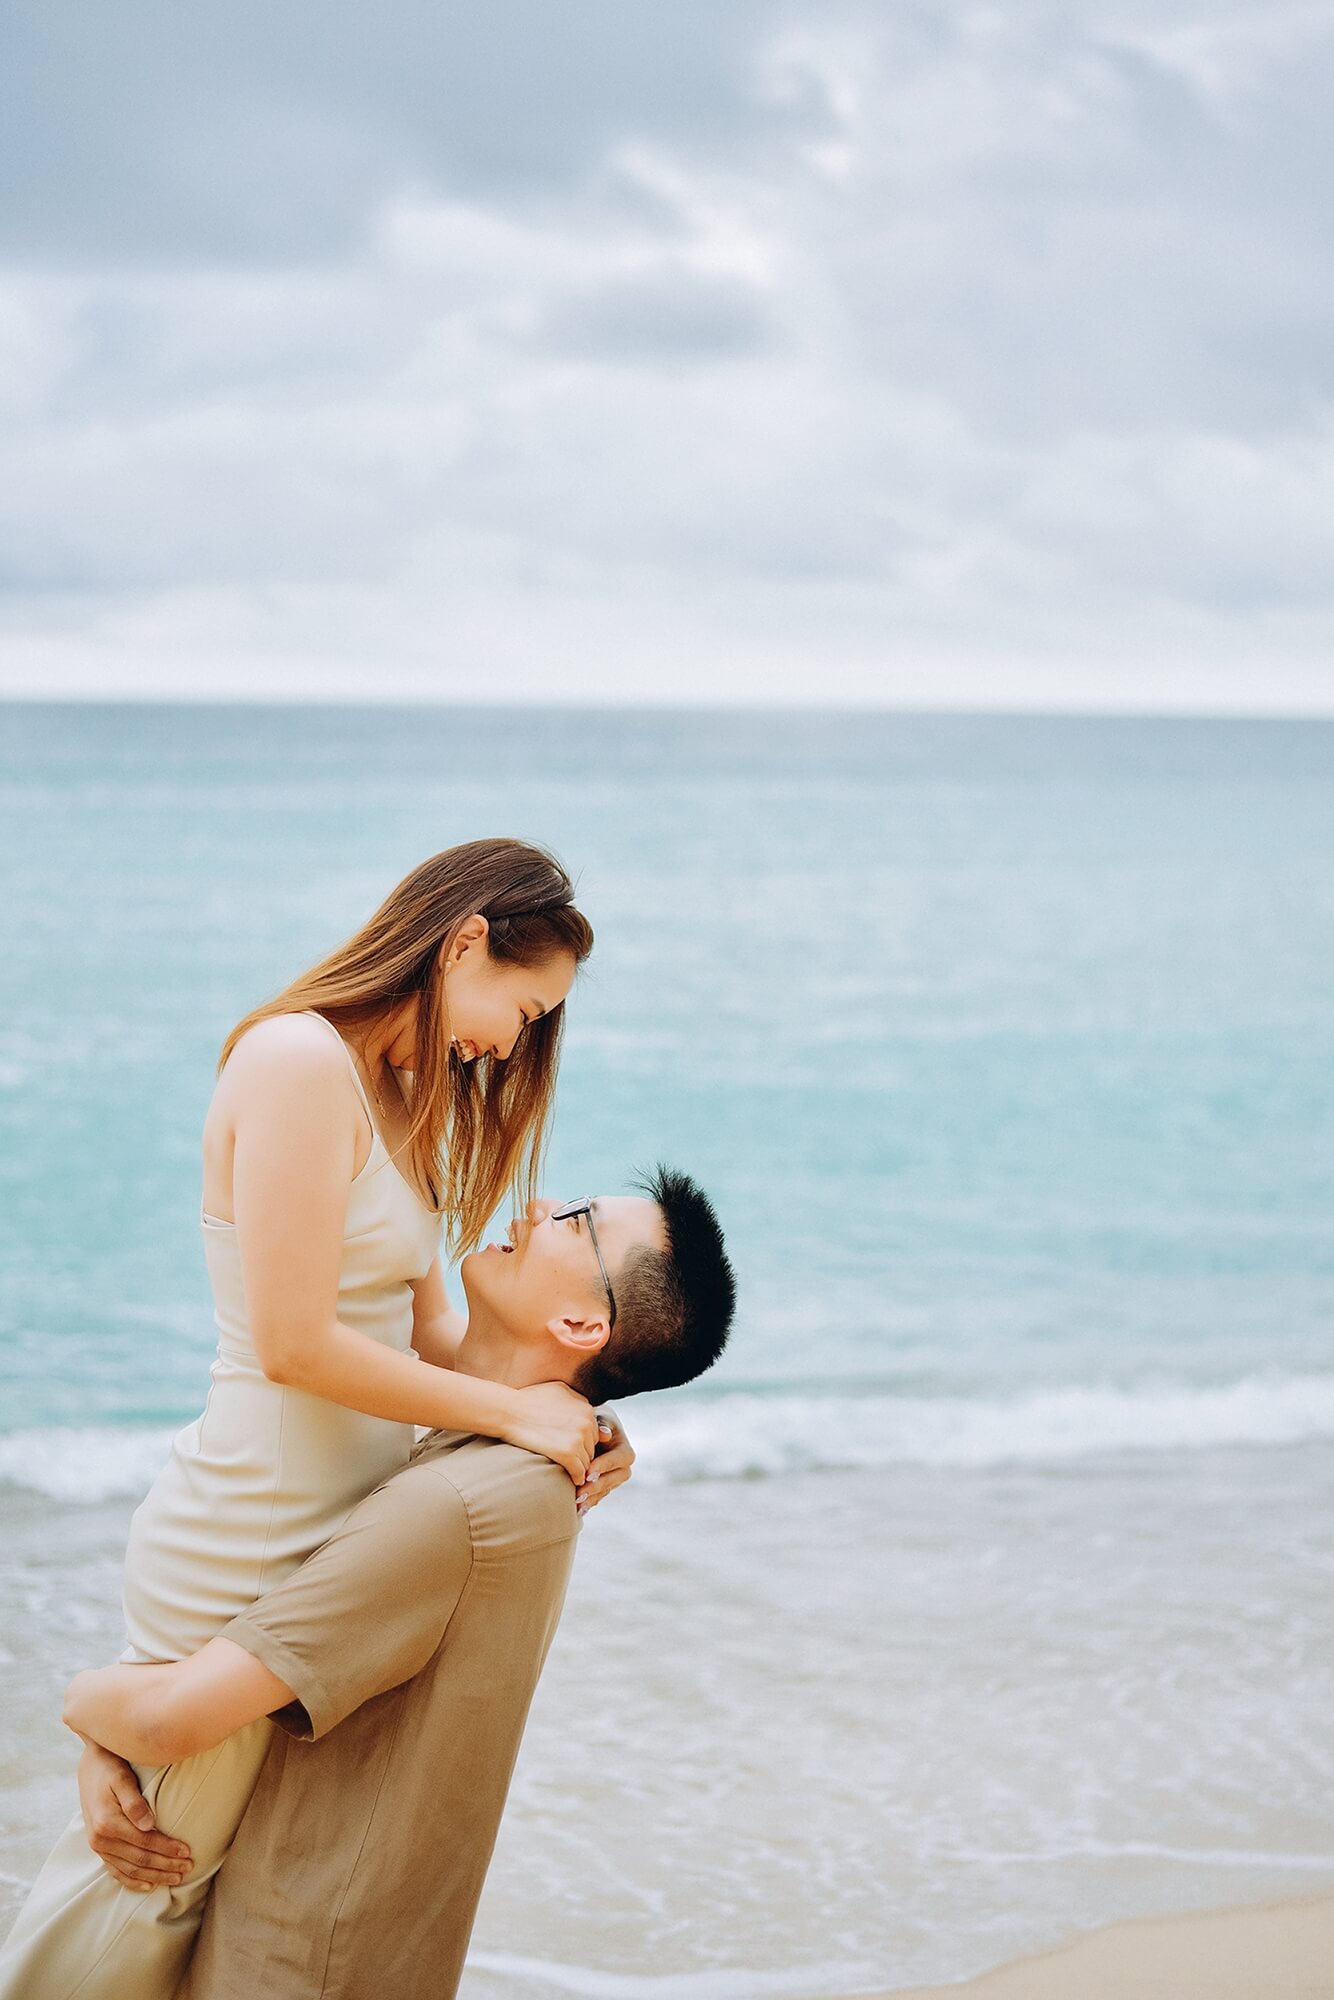 Romantic engagement photoshoot in Phuket